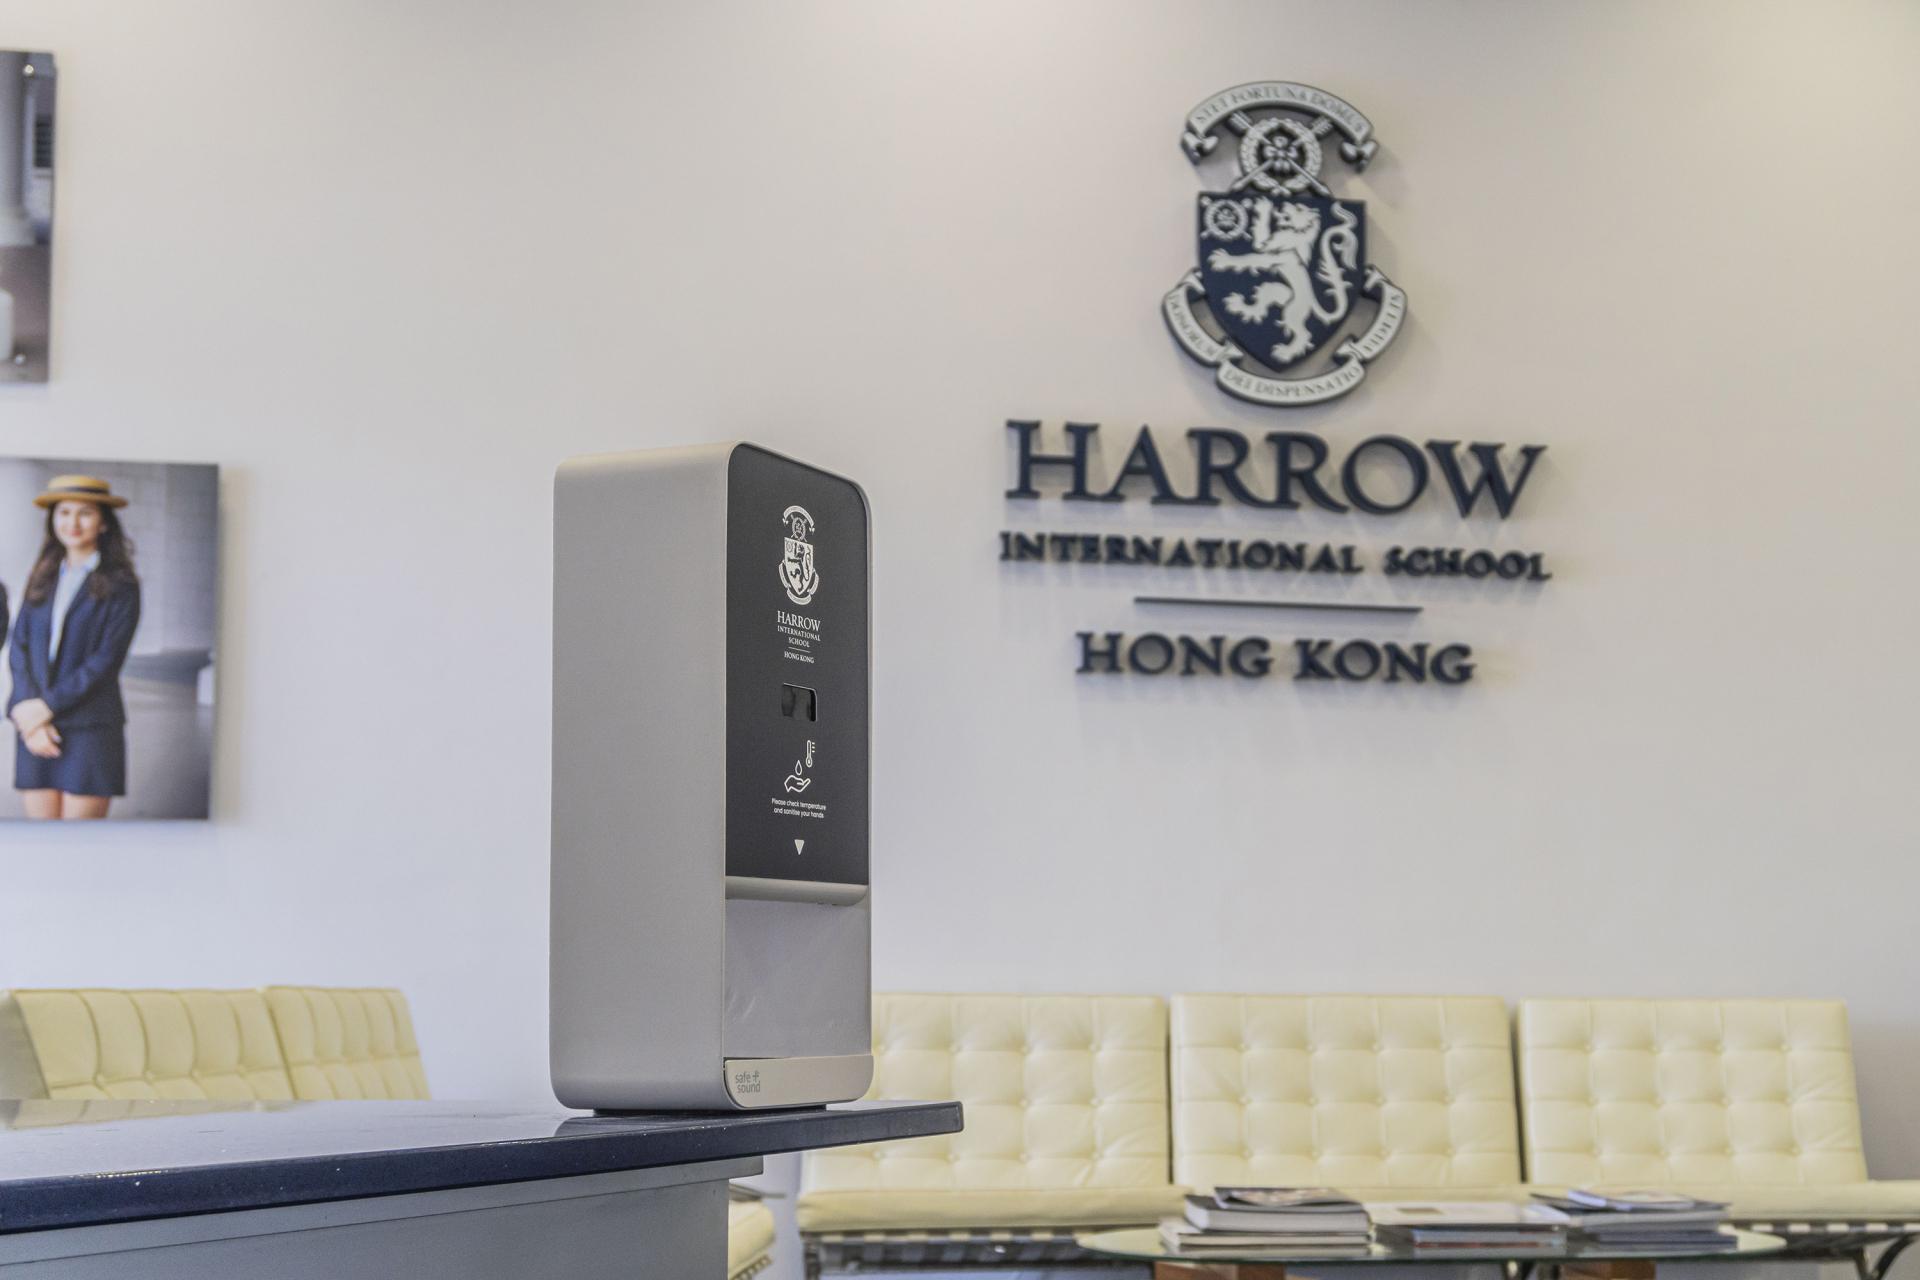 JEB Group’s innovative classroom design brings modernity and collaboration to Harrow International School Hong Kong